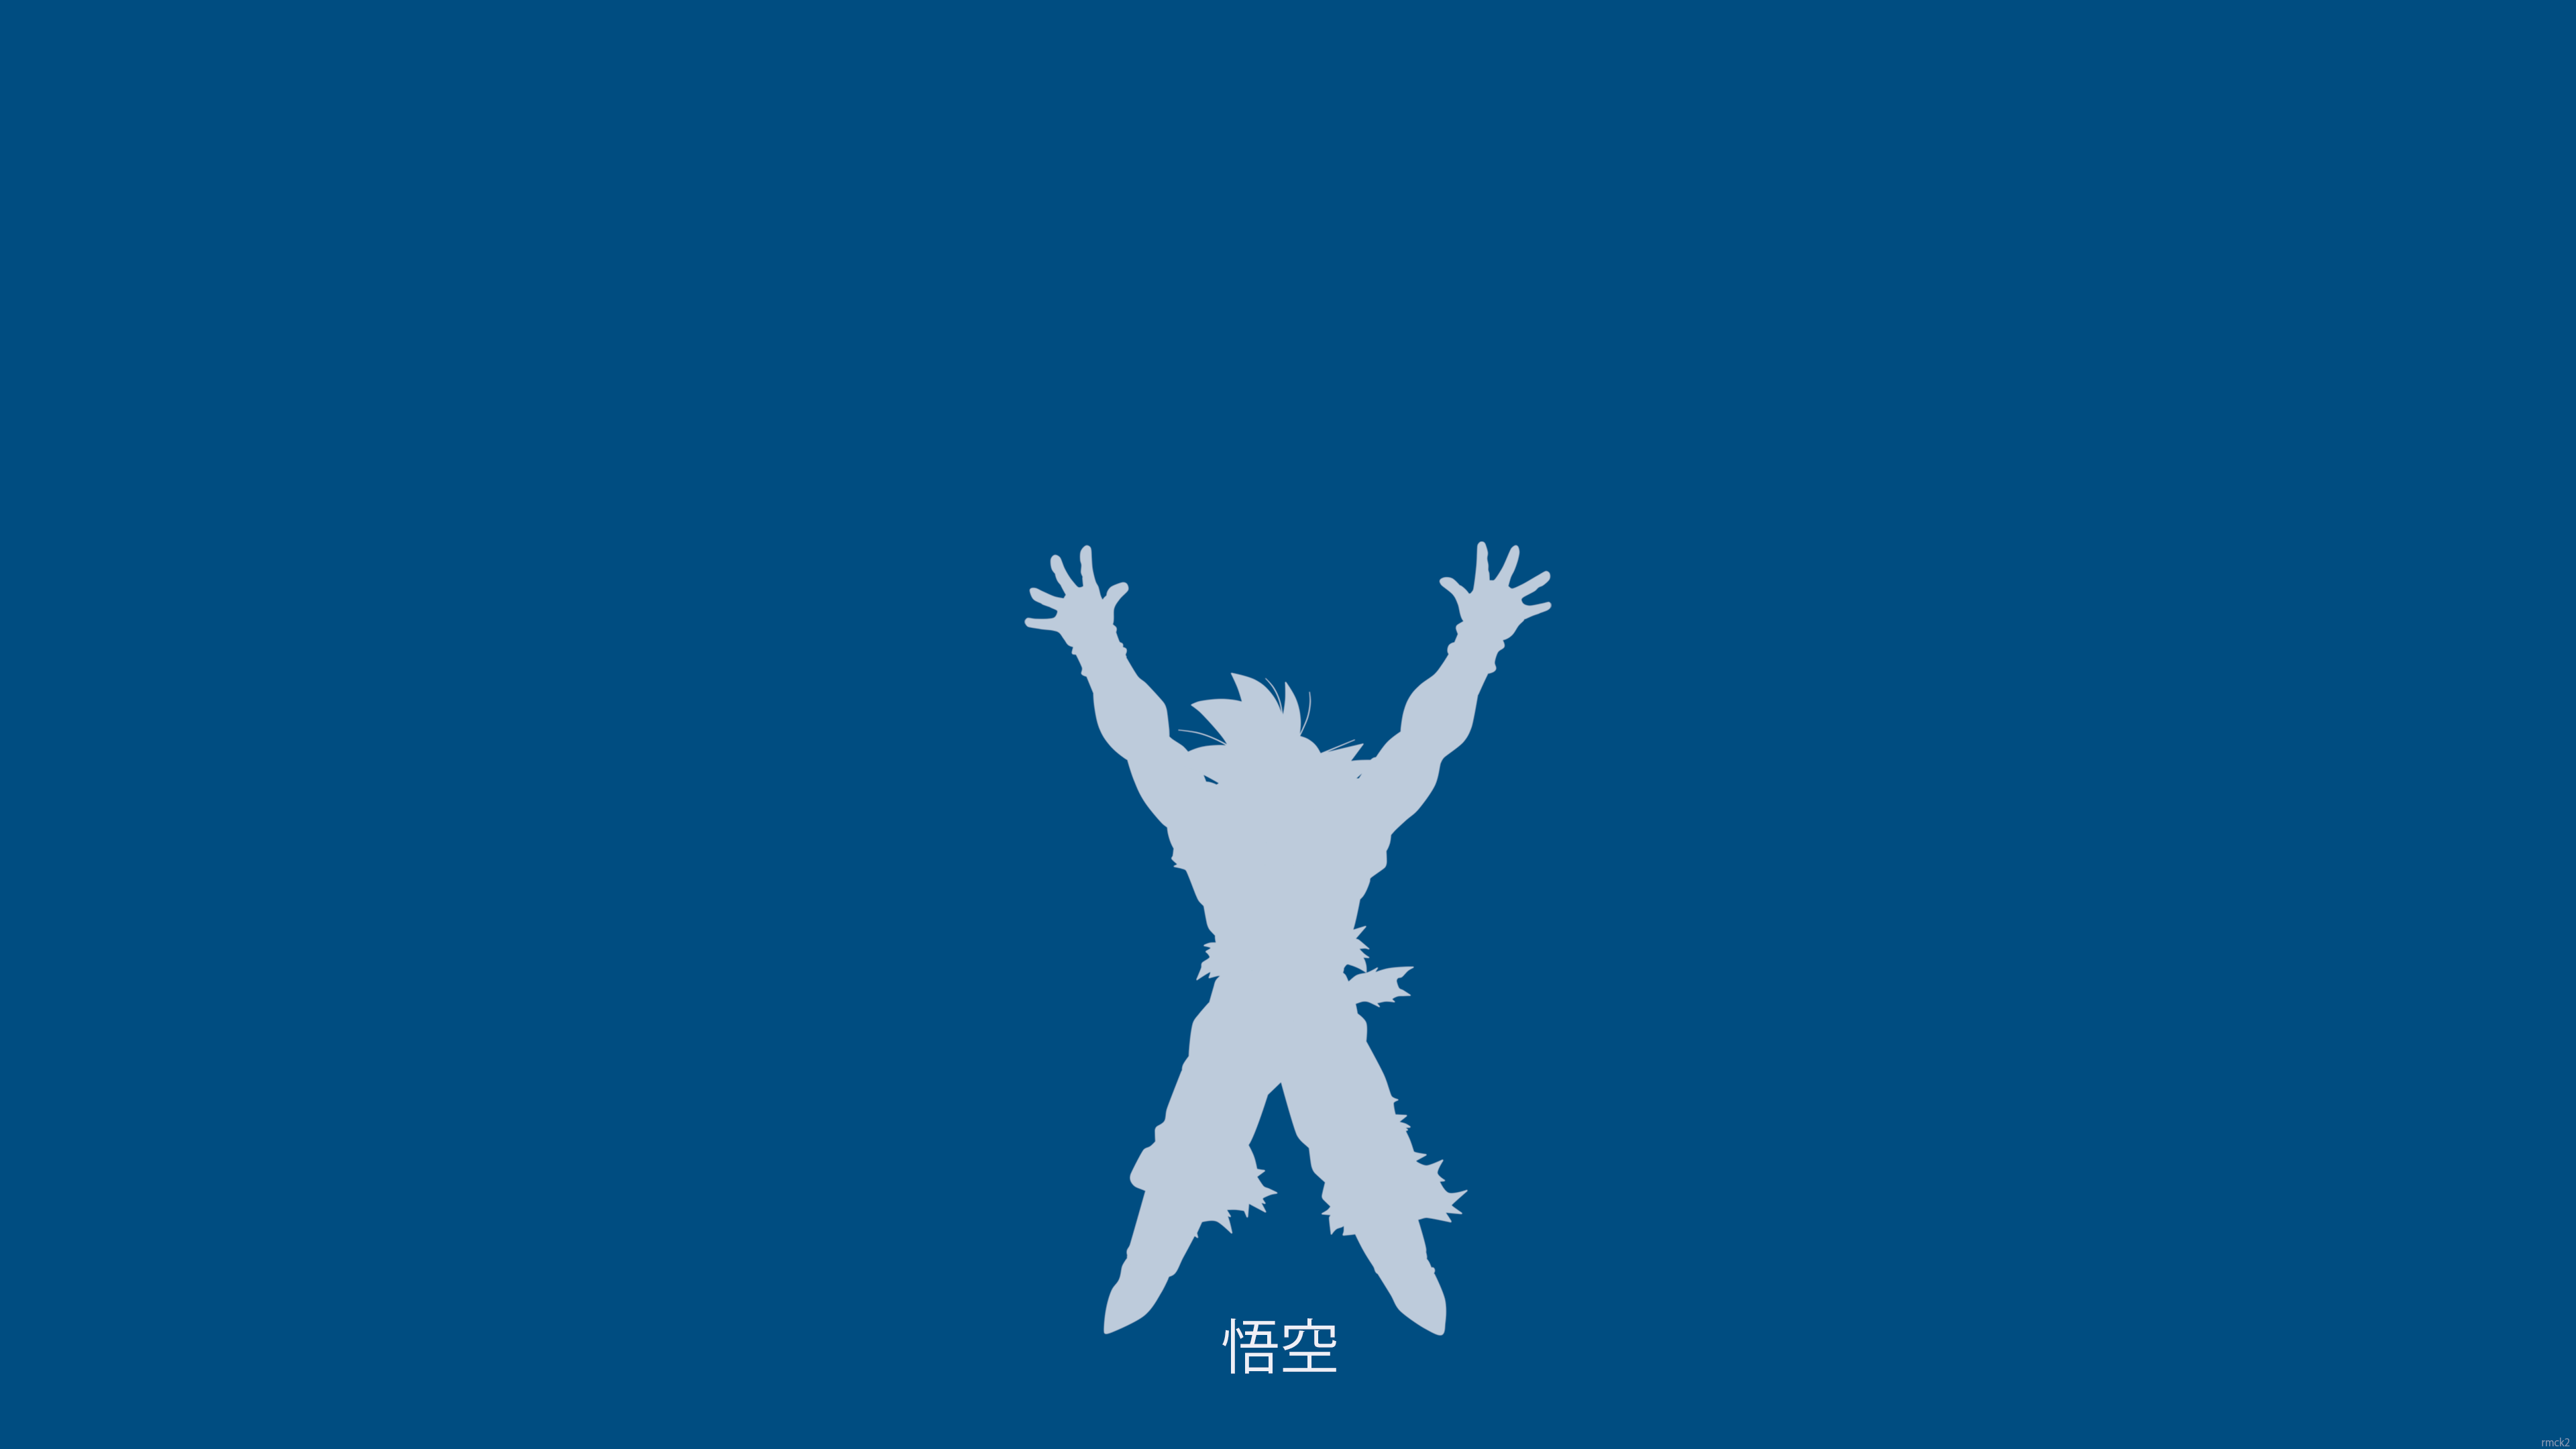 Anime 3840x2160 Son Goku minimalism Dragon Ball Z anime men simple background blue background arms up Japanese